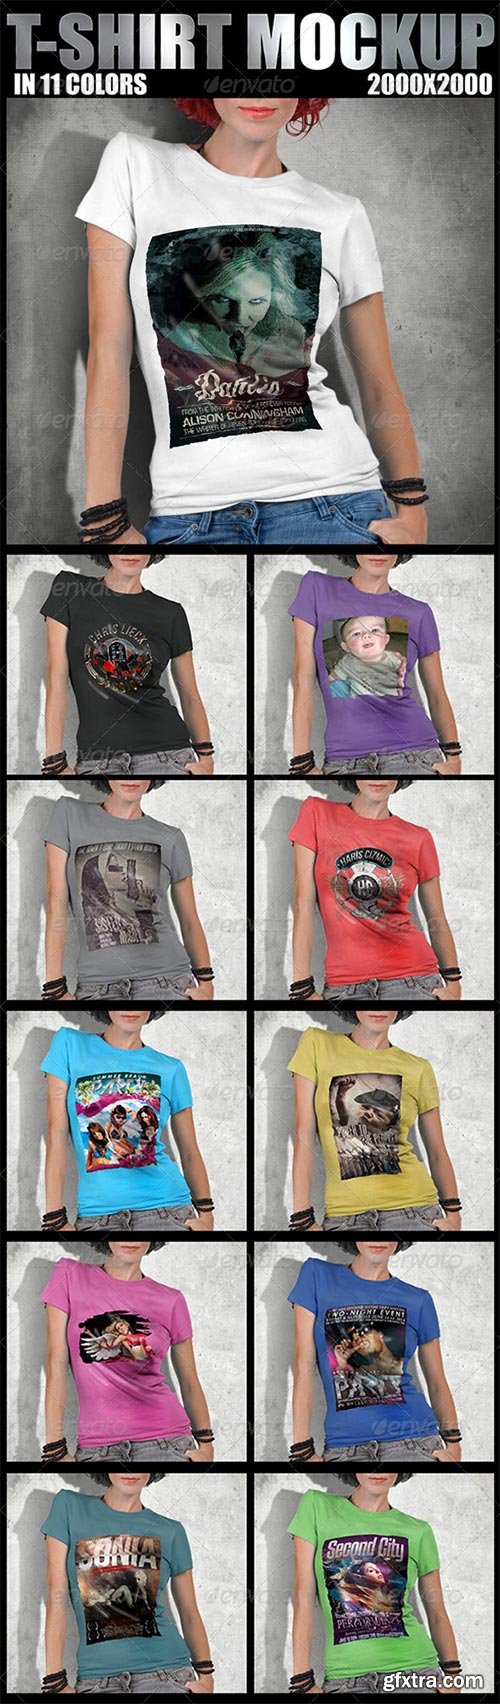 GraphicRiver - T-Shirt Mockup Design 5136162